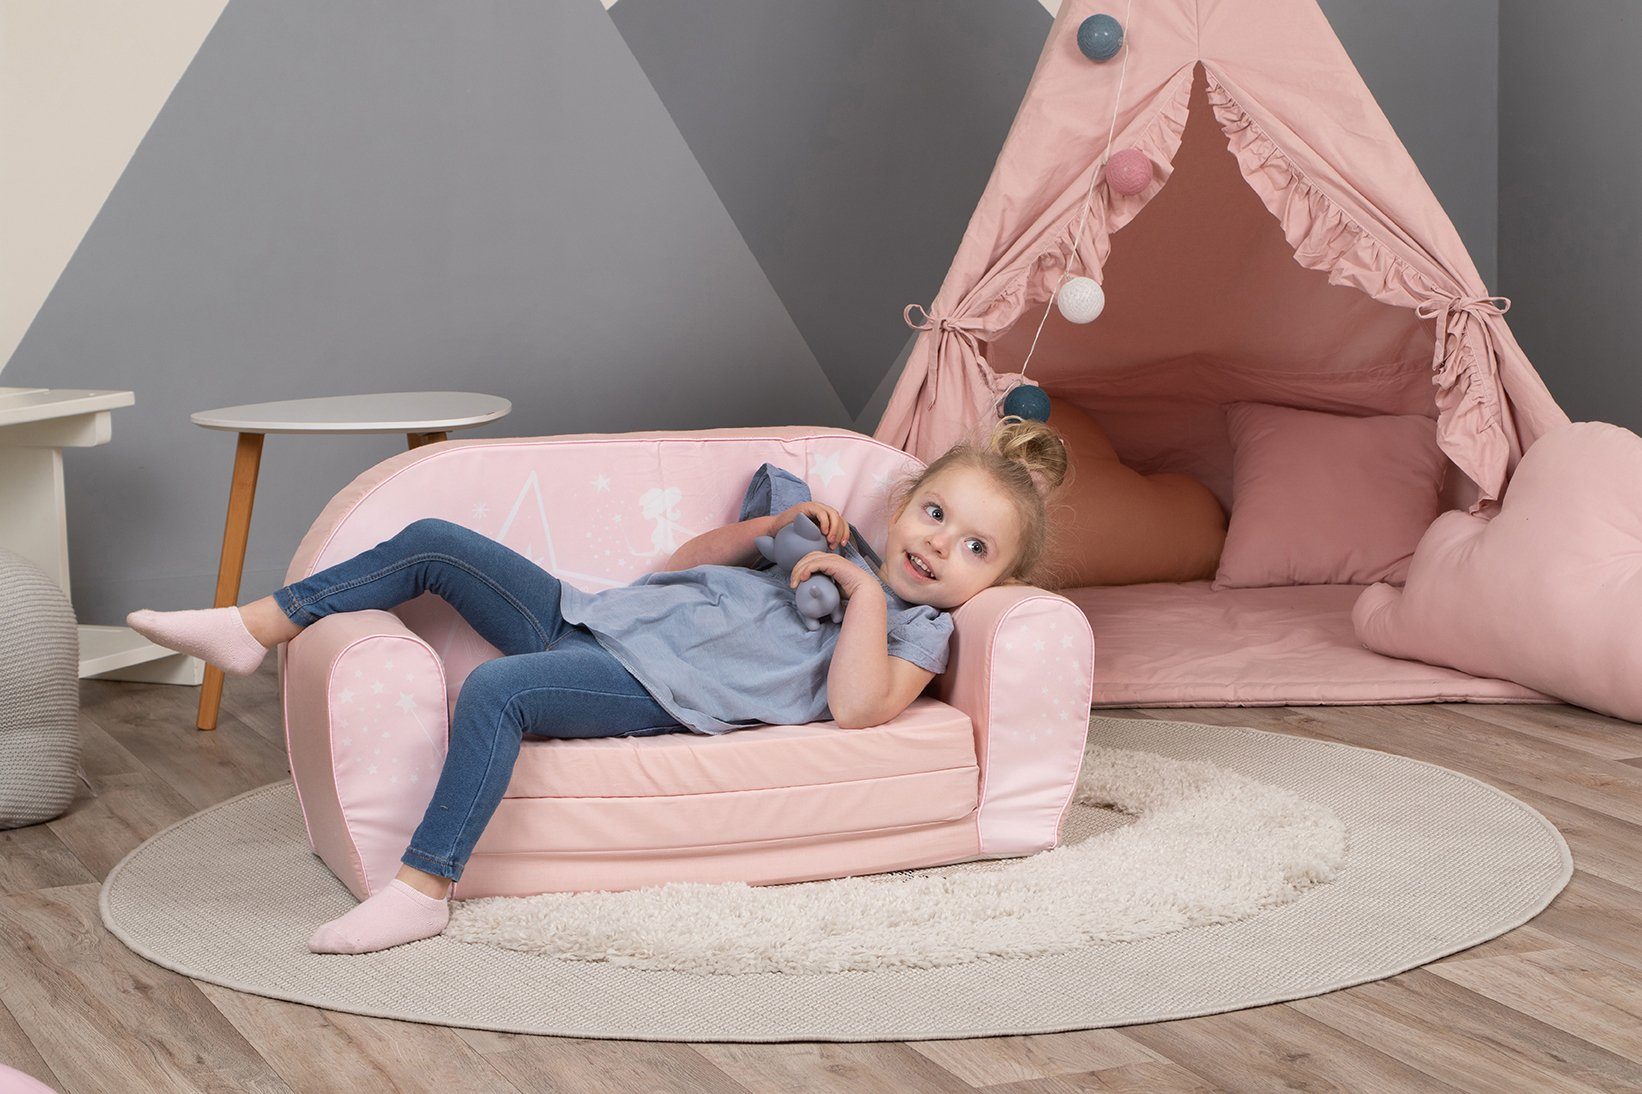 Kinder; Fairy in für Europe Knorrtoys® Sofa Made Pink,